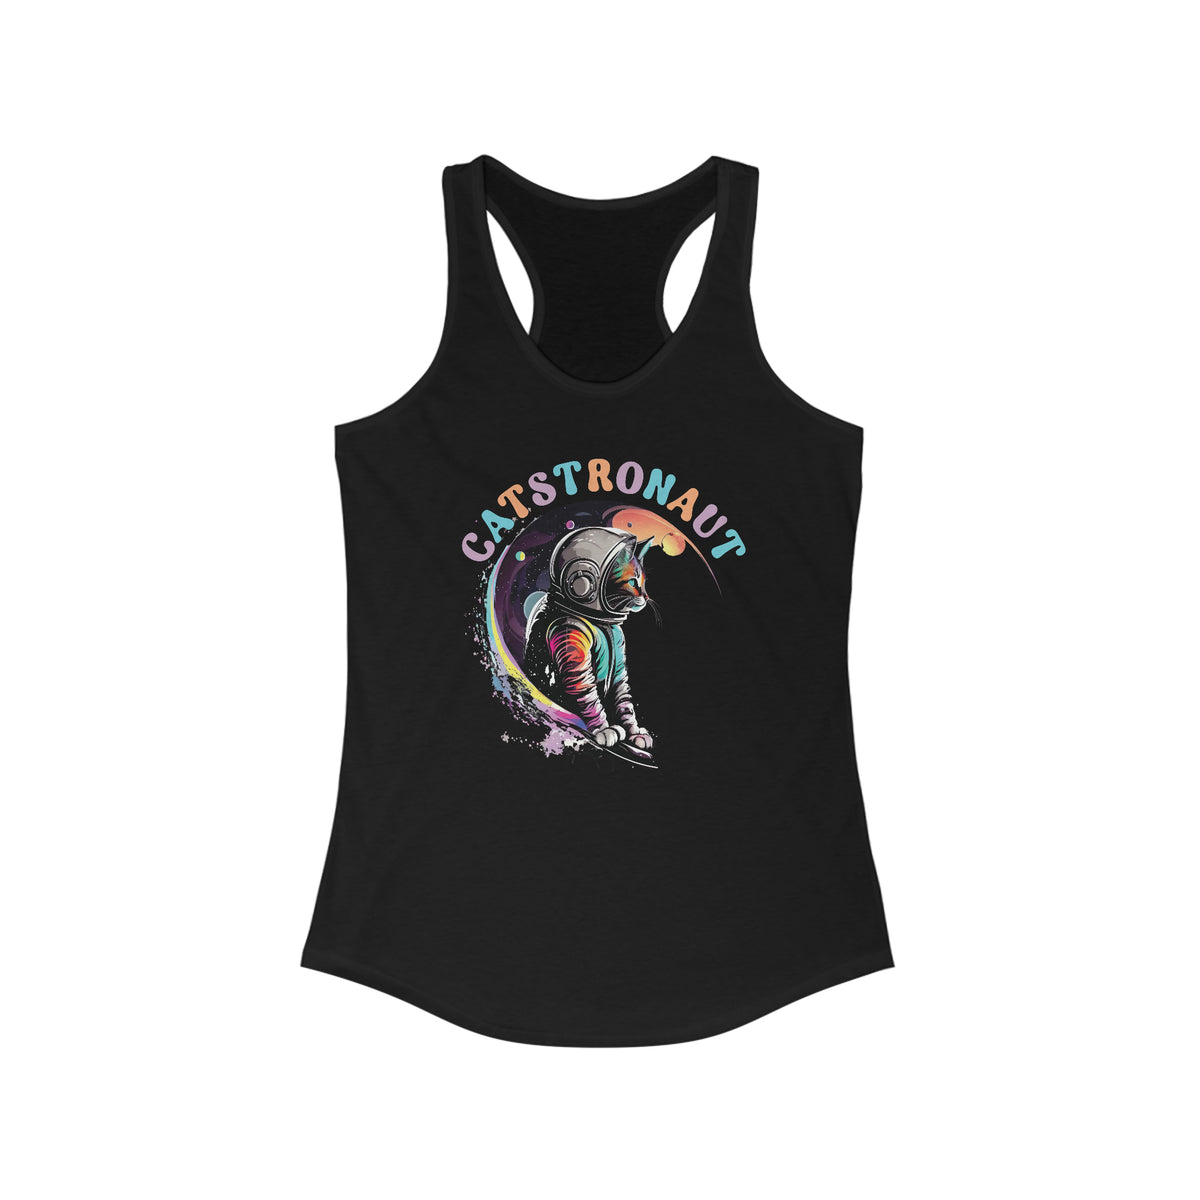 Catstronaut Funny Cat Shirt |Astronaut Shirt | Cat In Space Shirt | Cat Lover Gift | Nerd Gift | Women's Slim-fit Racerback Tank Top